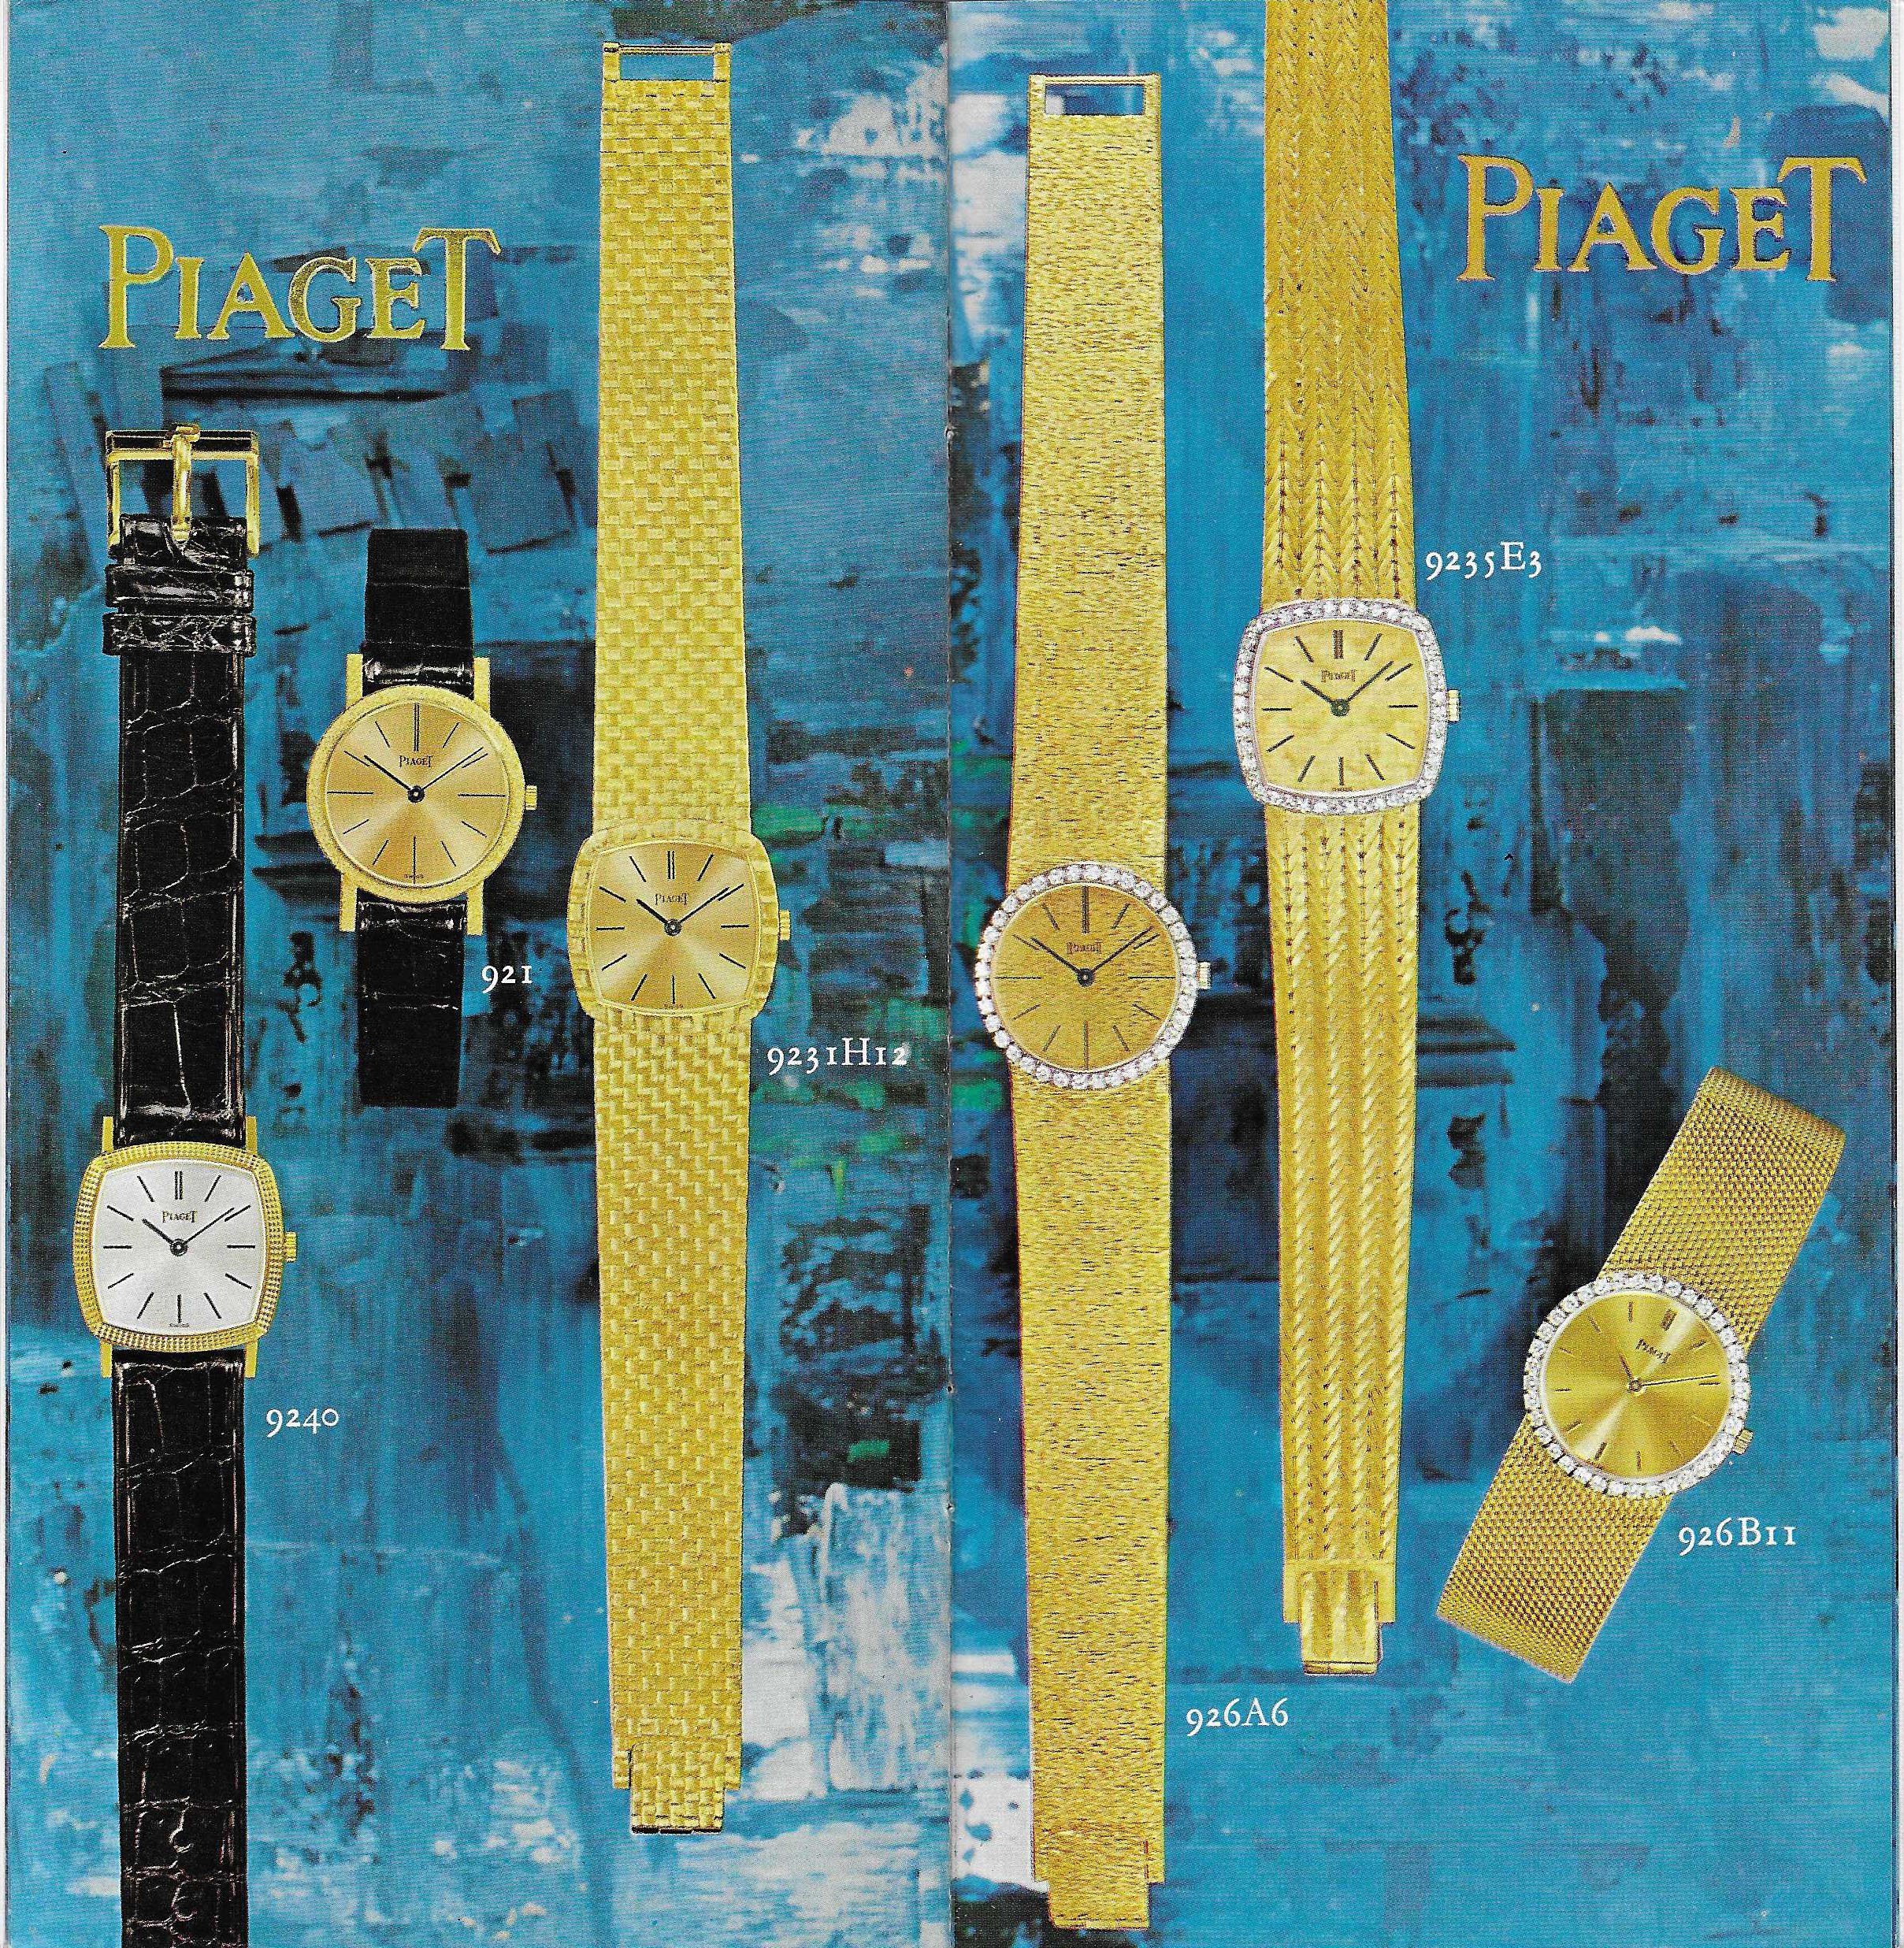 Piaget Brochure 1964 from Gomis